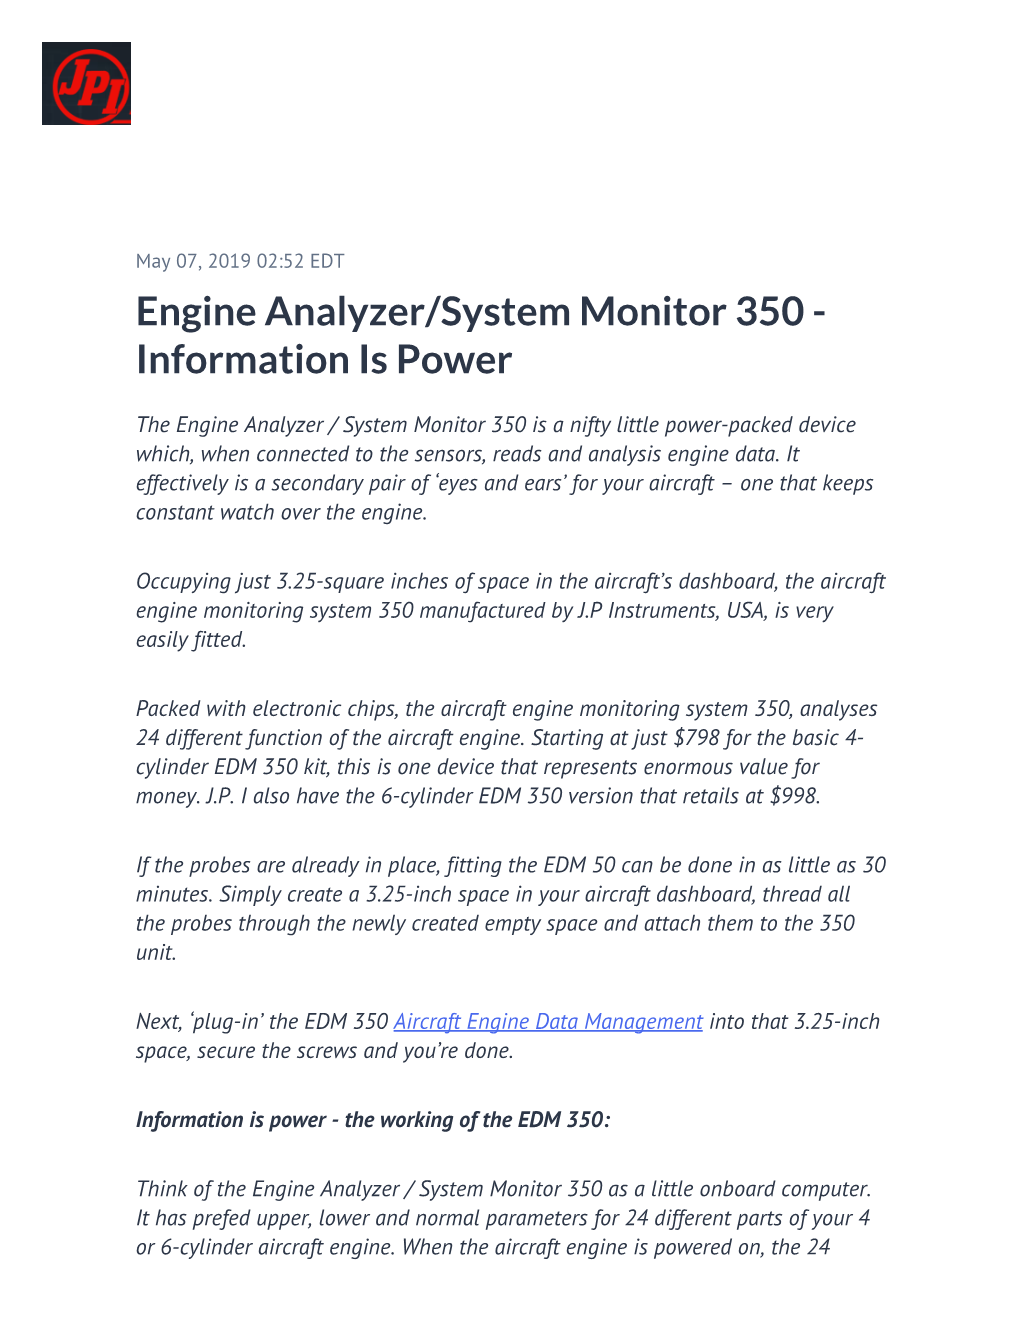 Engine Analyzer/System Monitor 350 - Information Is Power